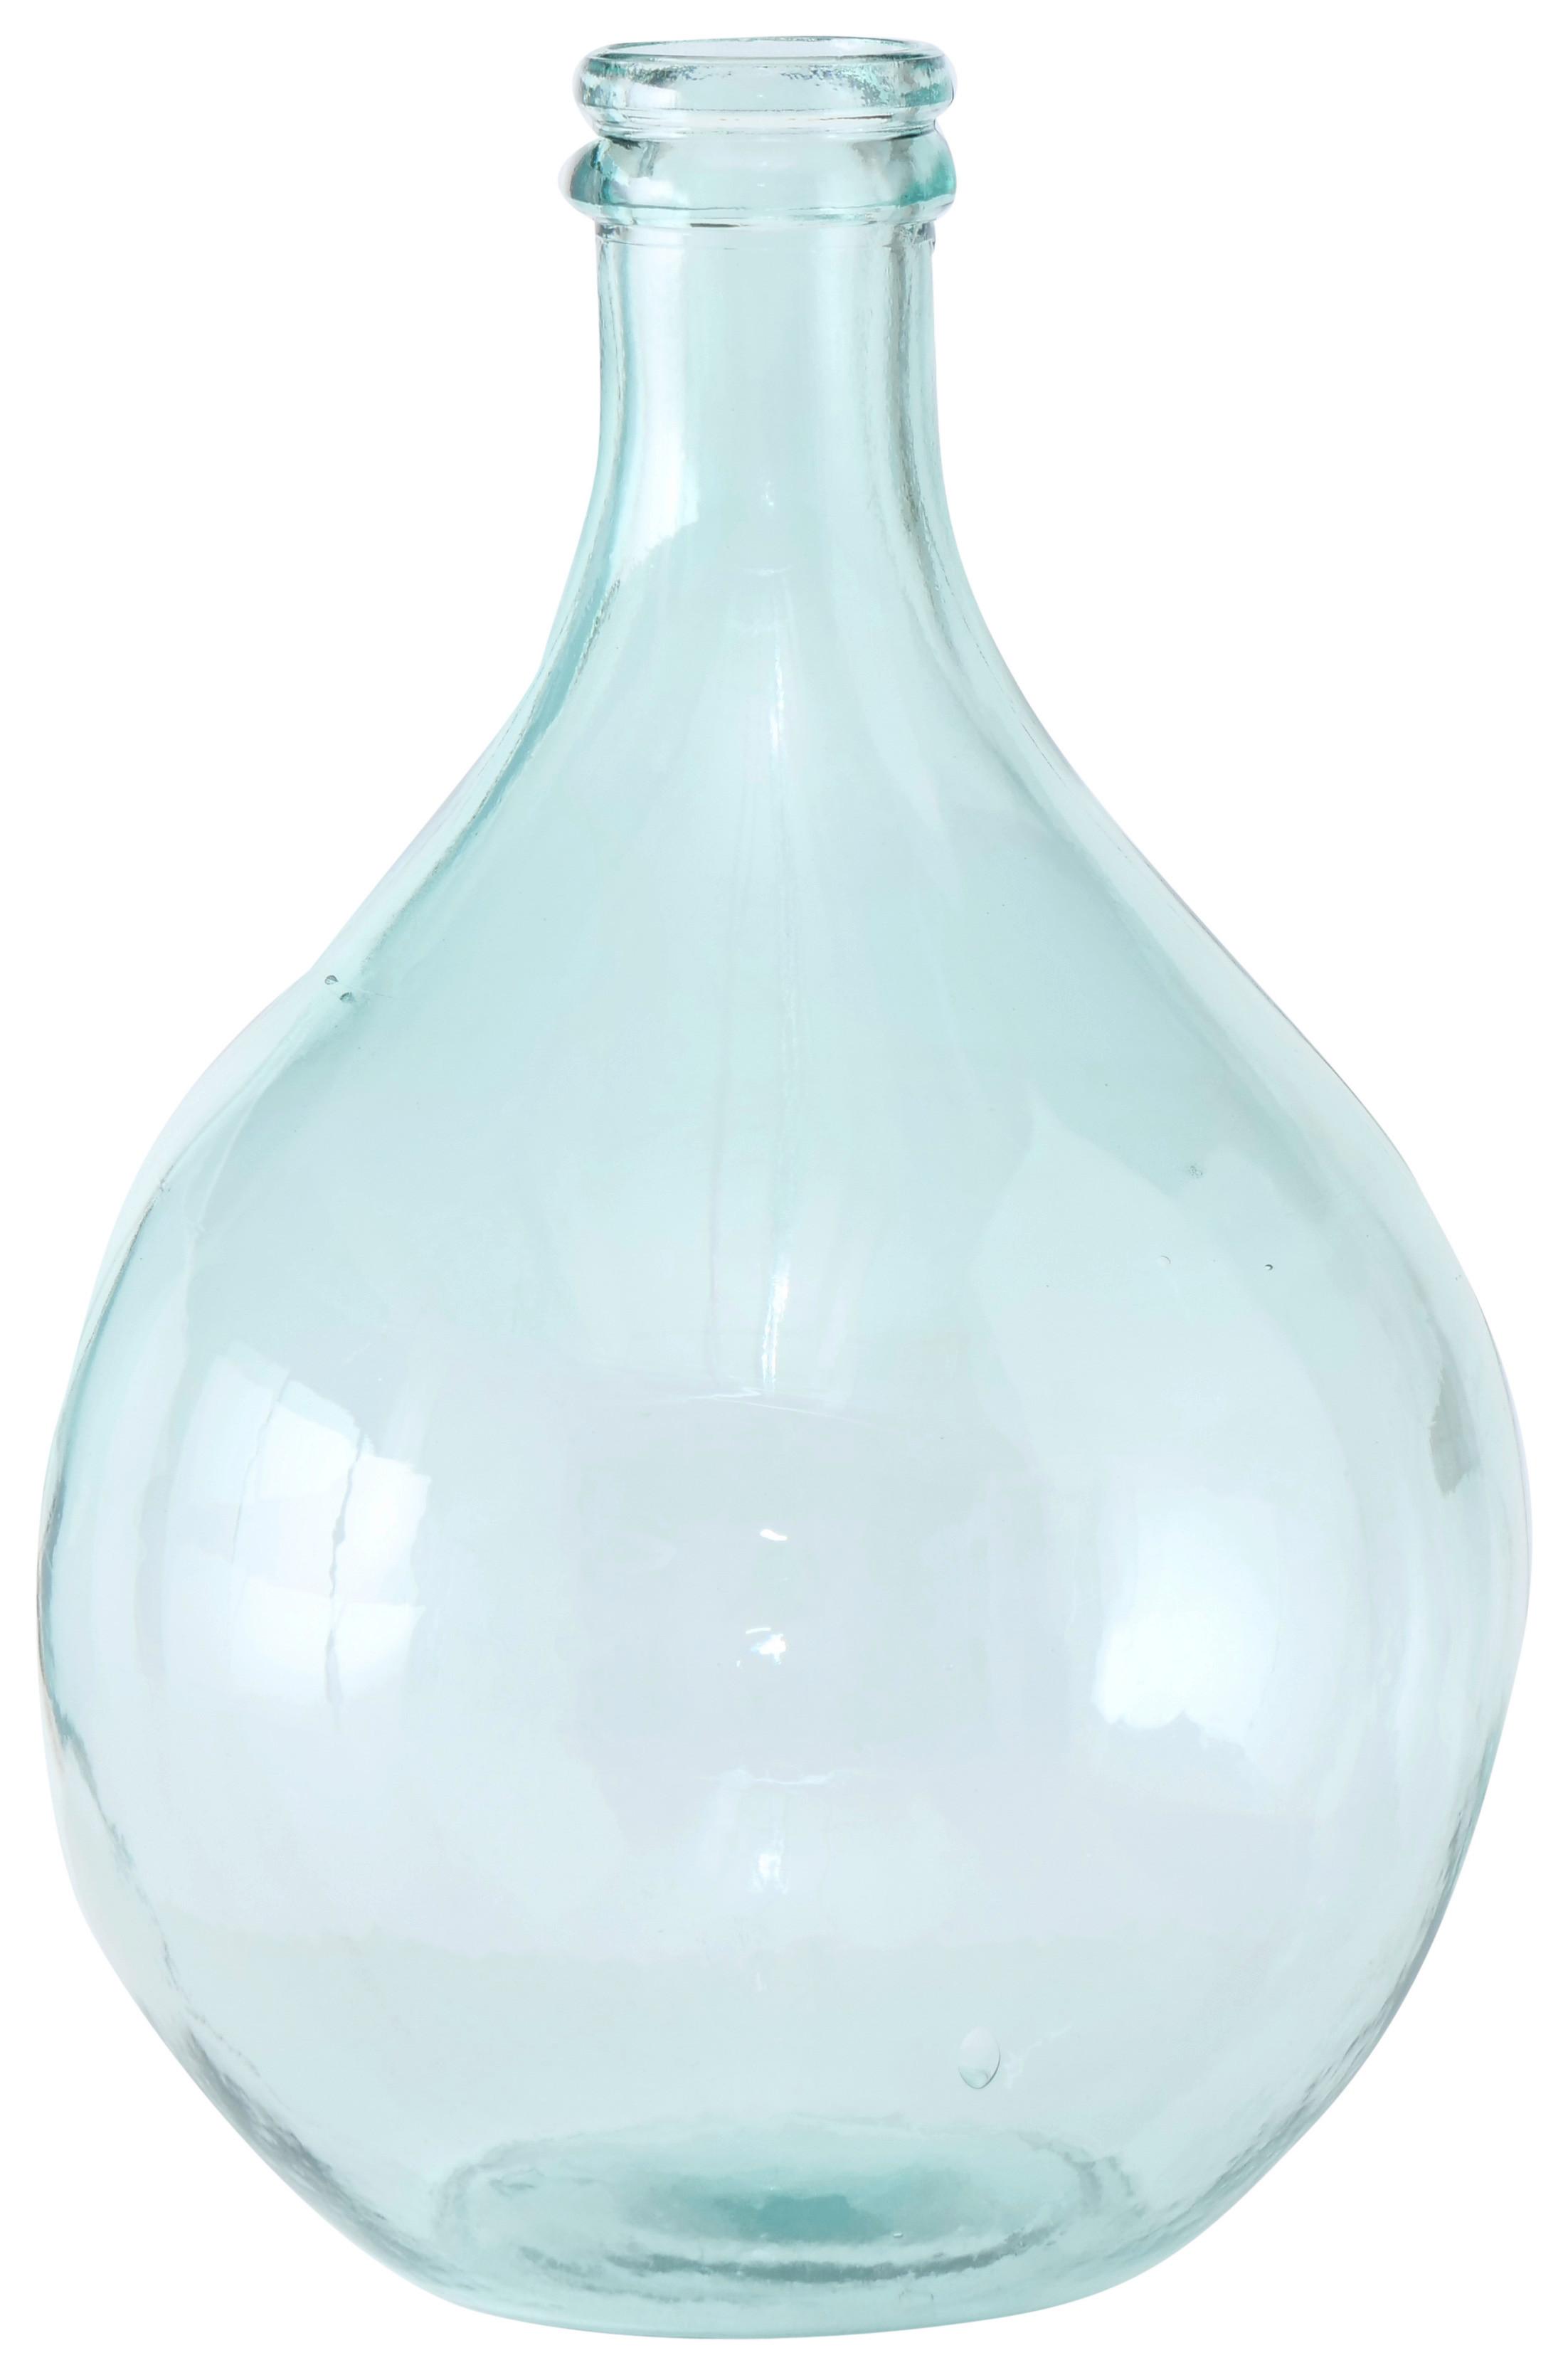 Vaza Nalani I -Paz- - svetlo modra/prozorno, Basics, steklo (29/43cm) - Premium Living